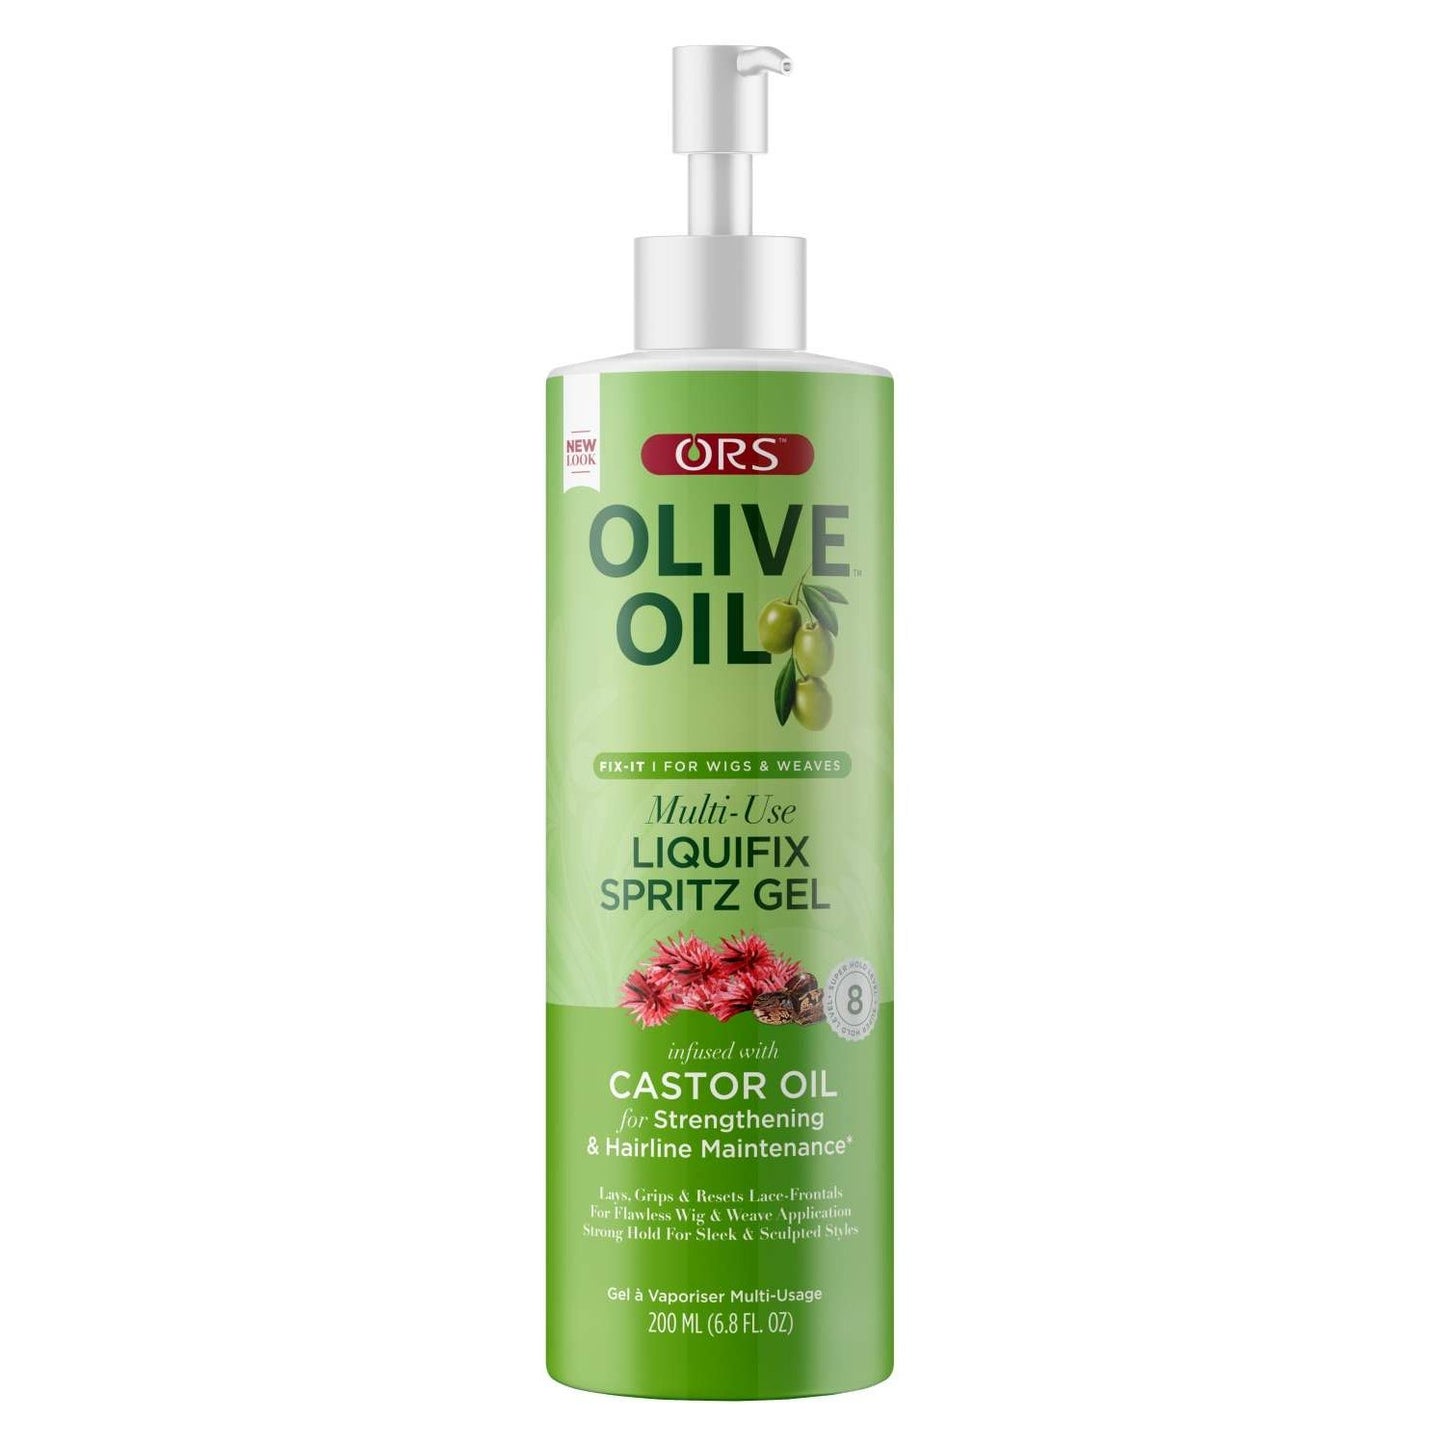 Ors Olive Oil Fix-It For Wigs  Weaves Multi-Use Liquifix Spritz Gel 6.8 Oz